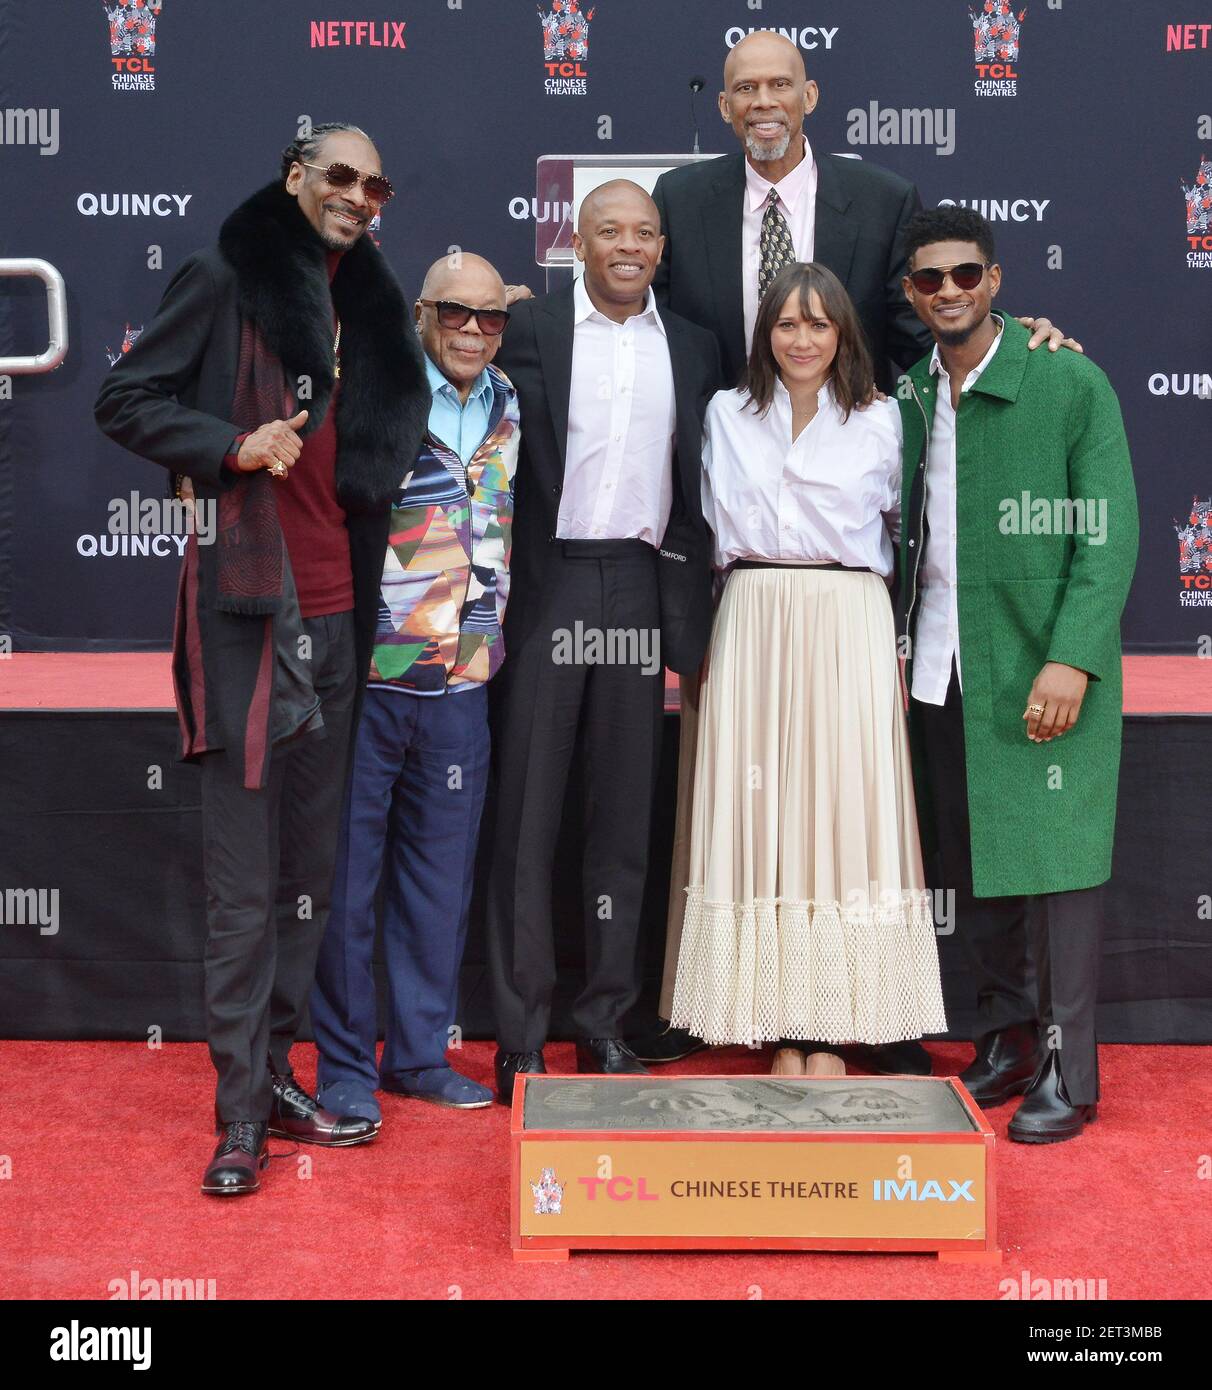 (L-R) Snoop Dogg, Quincy Jones, Dr. Dre, Kareem Abdul-Jabbar Rashida ...